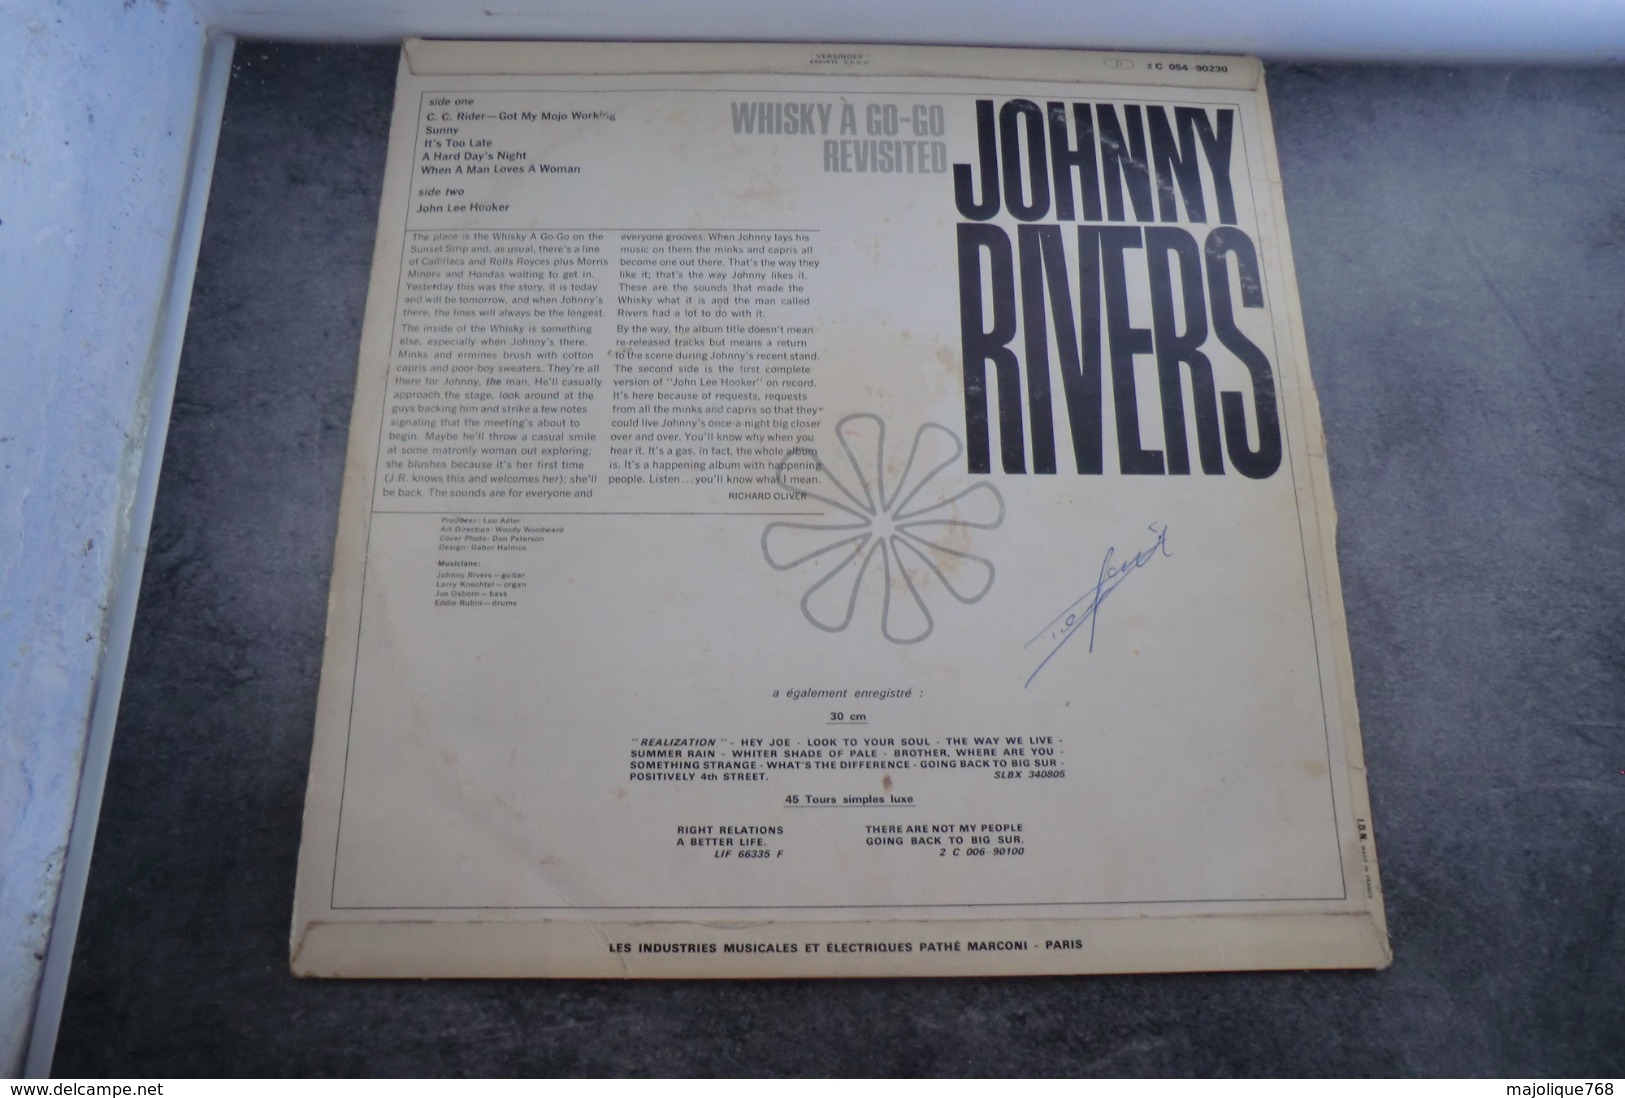 Disque 33 Cm De Johnny Rivers - Whisky à Go-Go Revisited - John Lee Hooker - Liberty 2C 054-90230 - - Rock